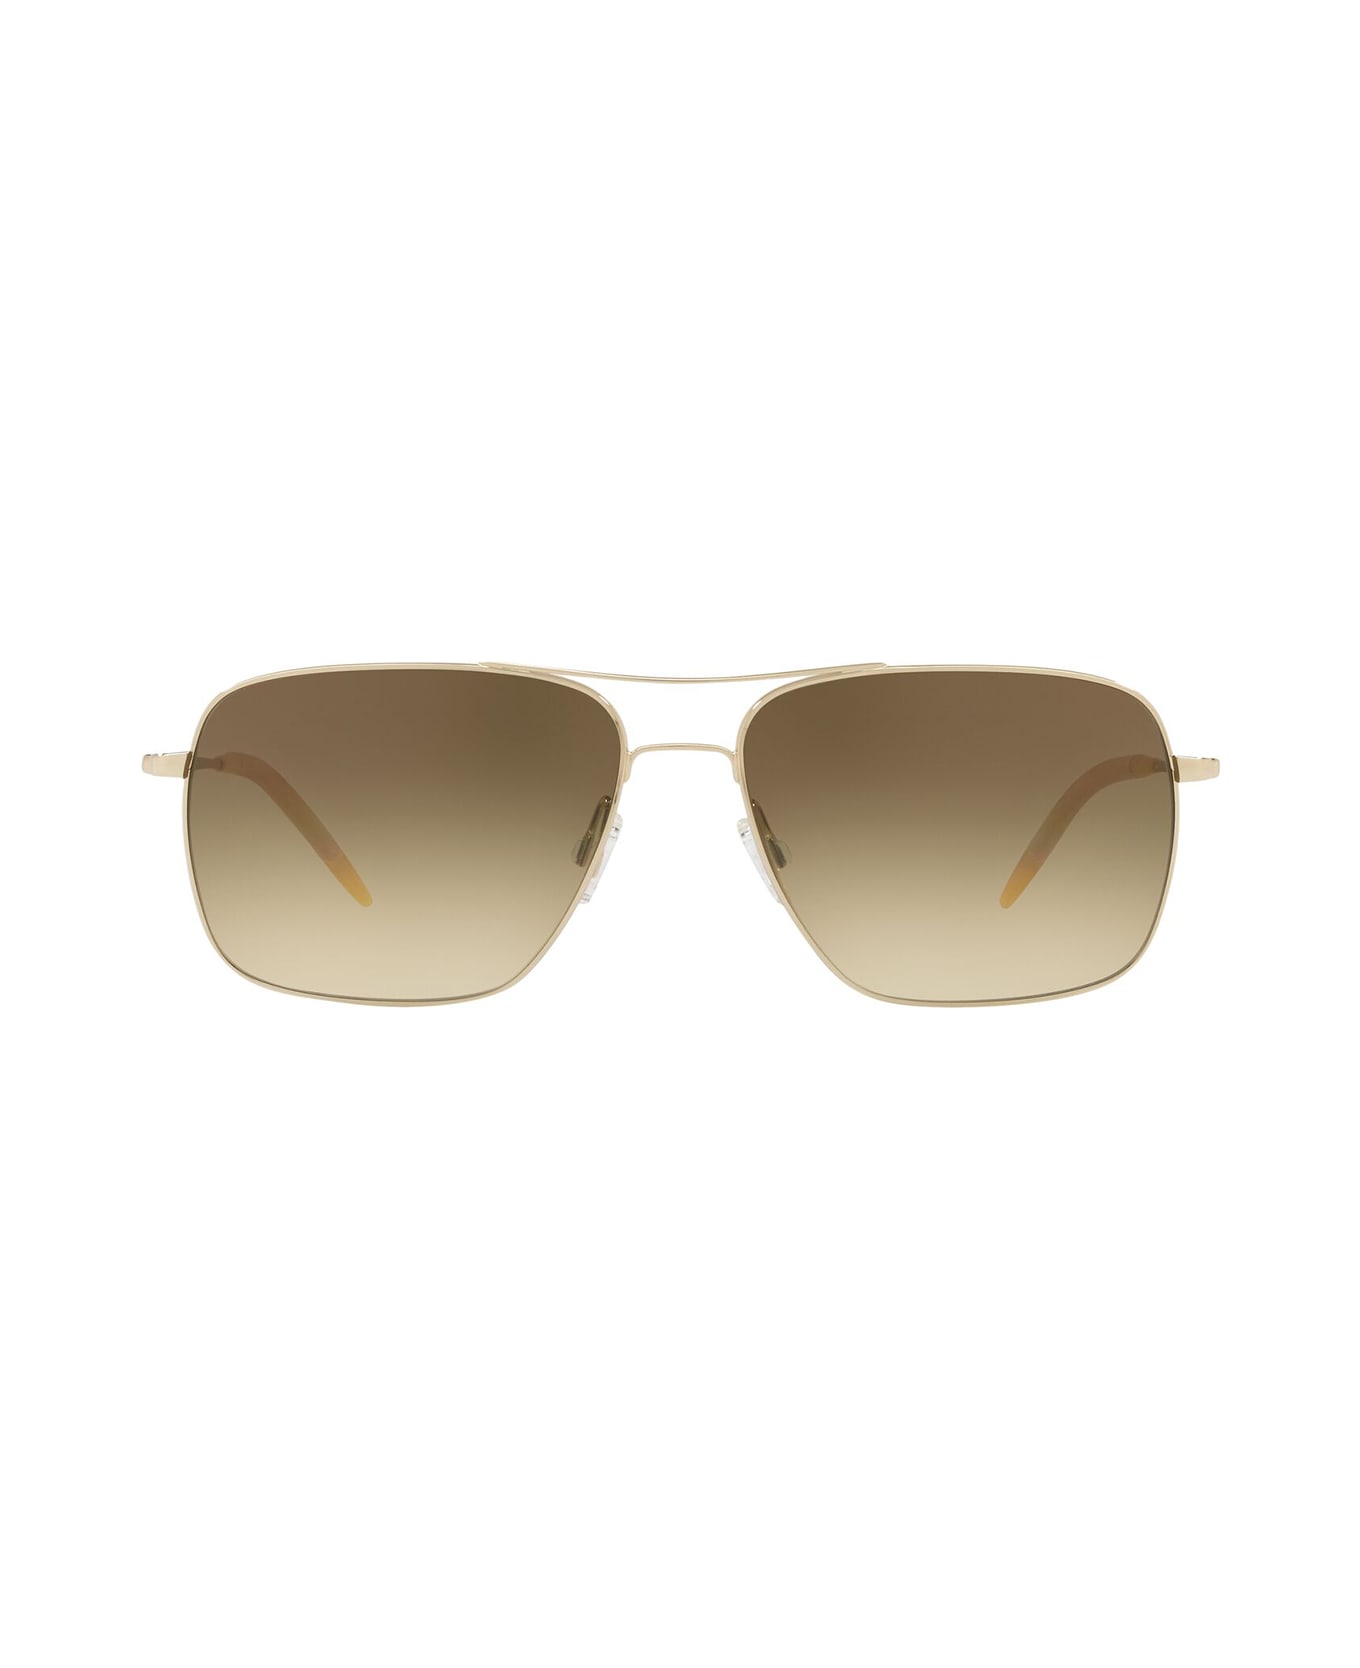 Oliver Peoples Ov1150s Gold Sunglasses - Gold